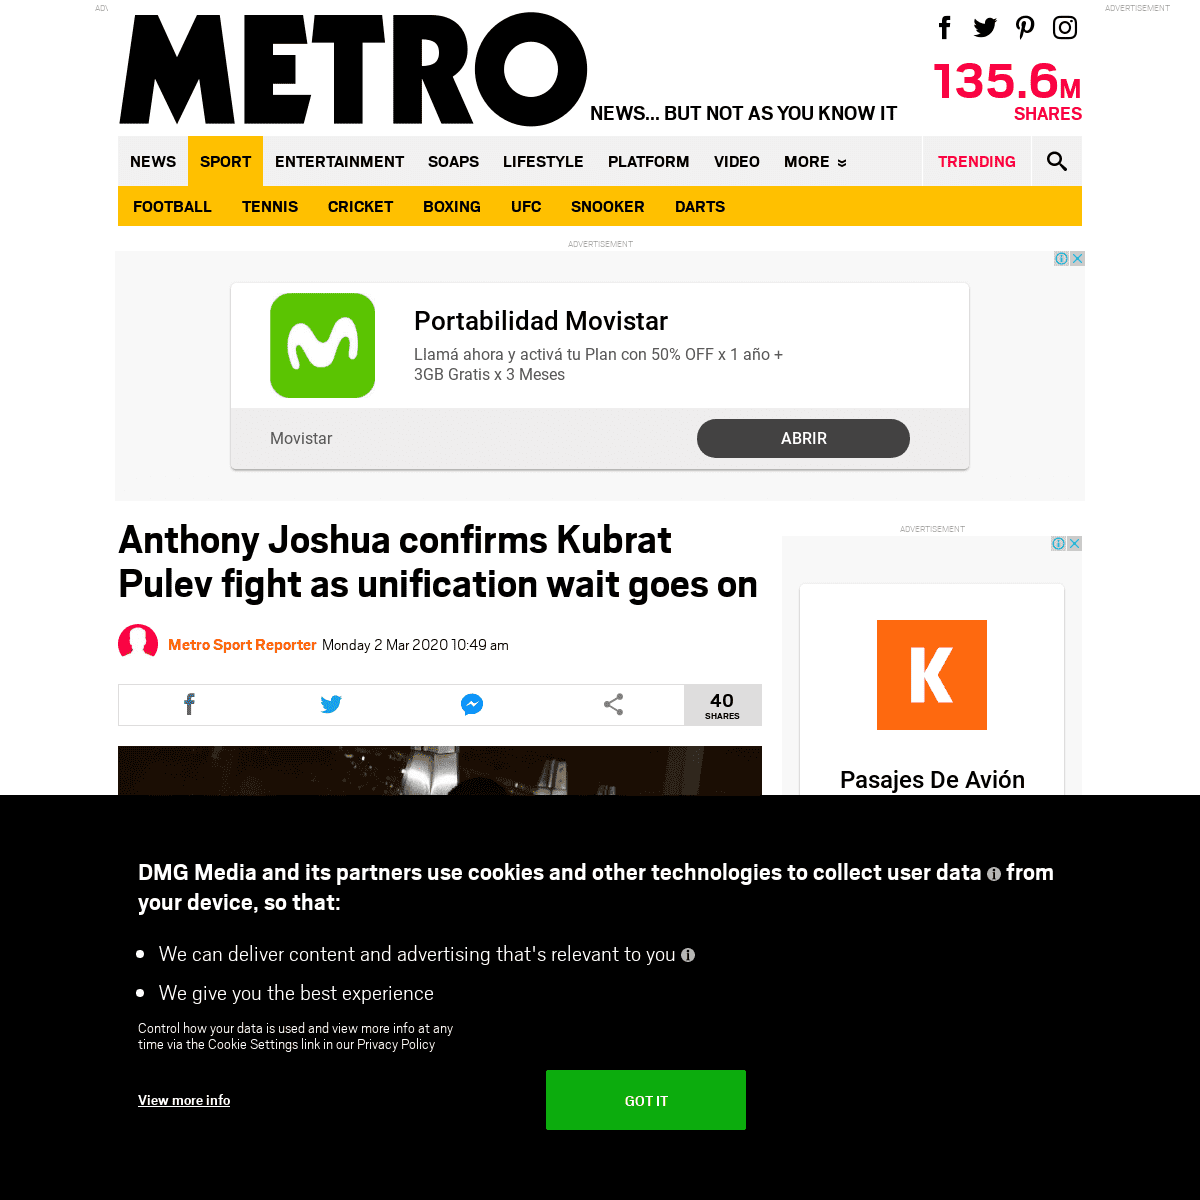 A complete backup of metro.co.uk/2020/03/02/anthony-joshua-confirms-kubrat-pulev-fight-unification-wait-goes-12332475/